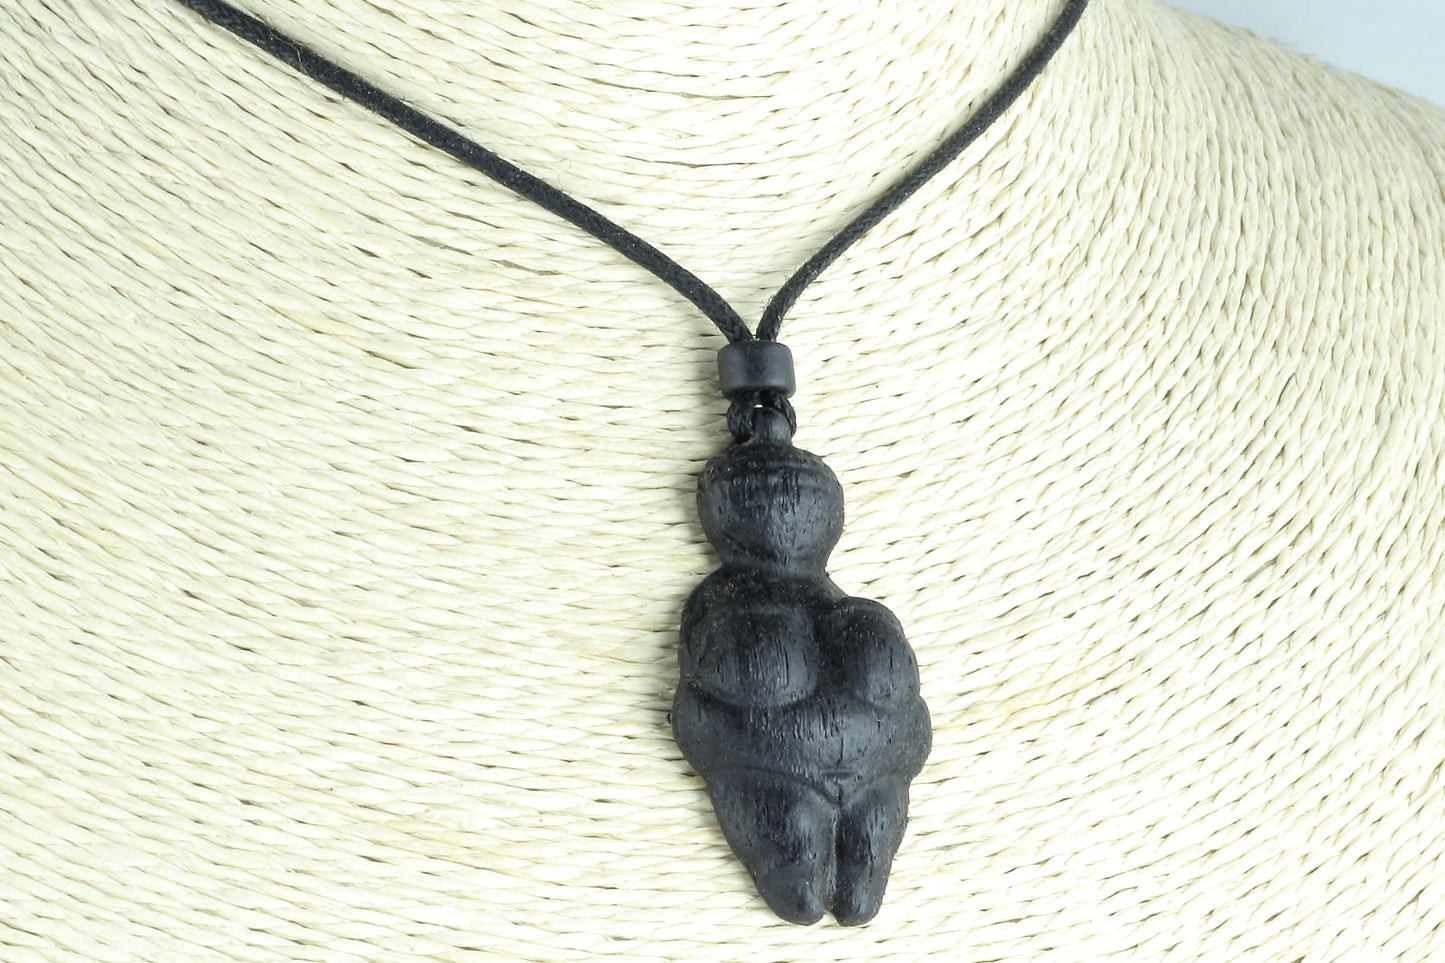 Venus of willendorf Venus Willendorf pendant Goddess necklace Fertility necklace Fertility amulet Made of Irish bog oak